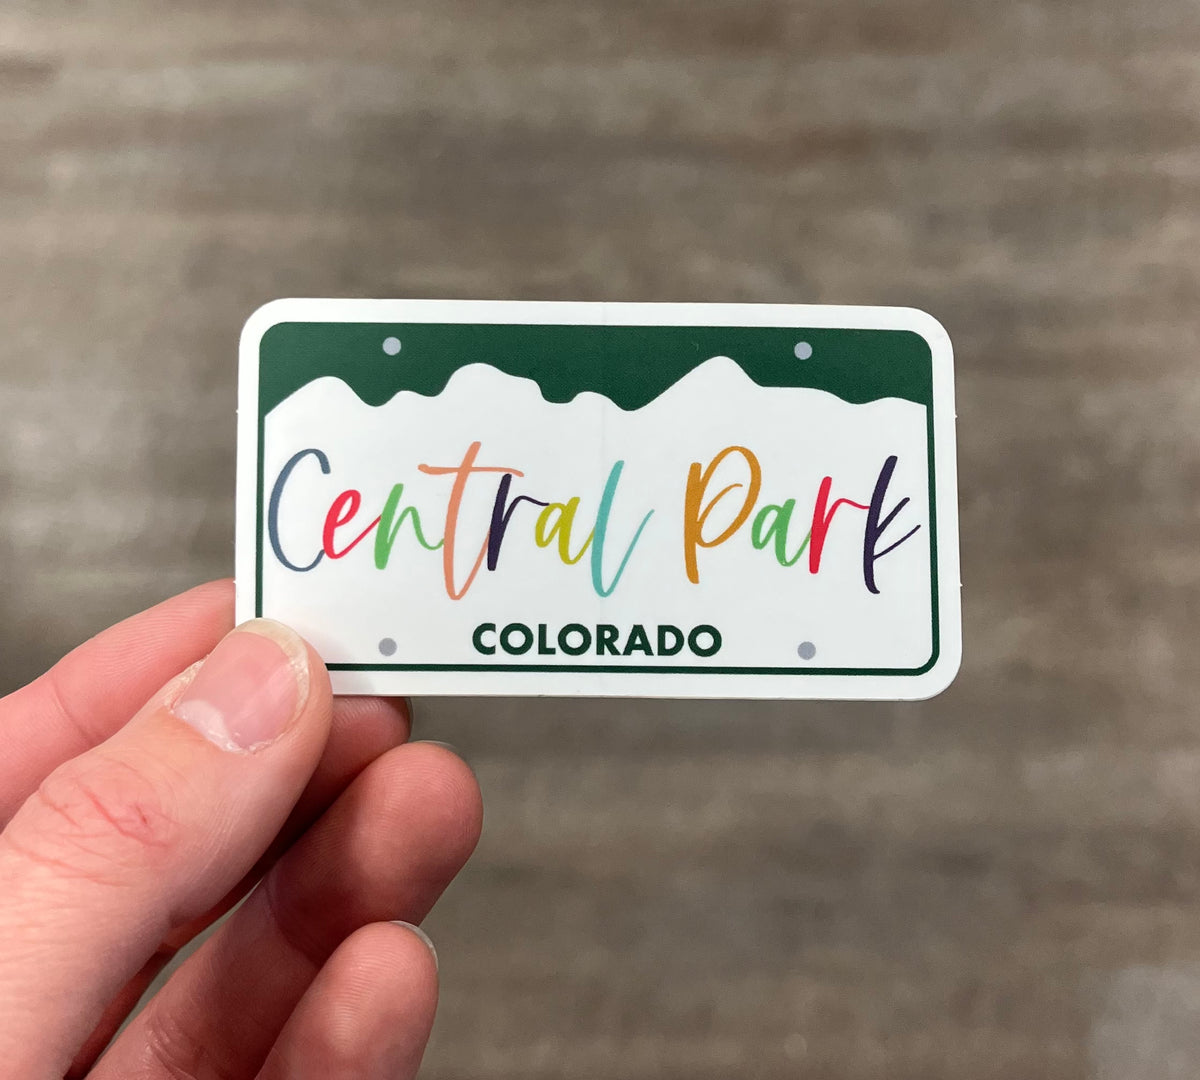 Central Park Colorado License Plate Sticker - Aspen Lane 